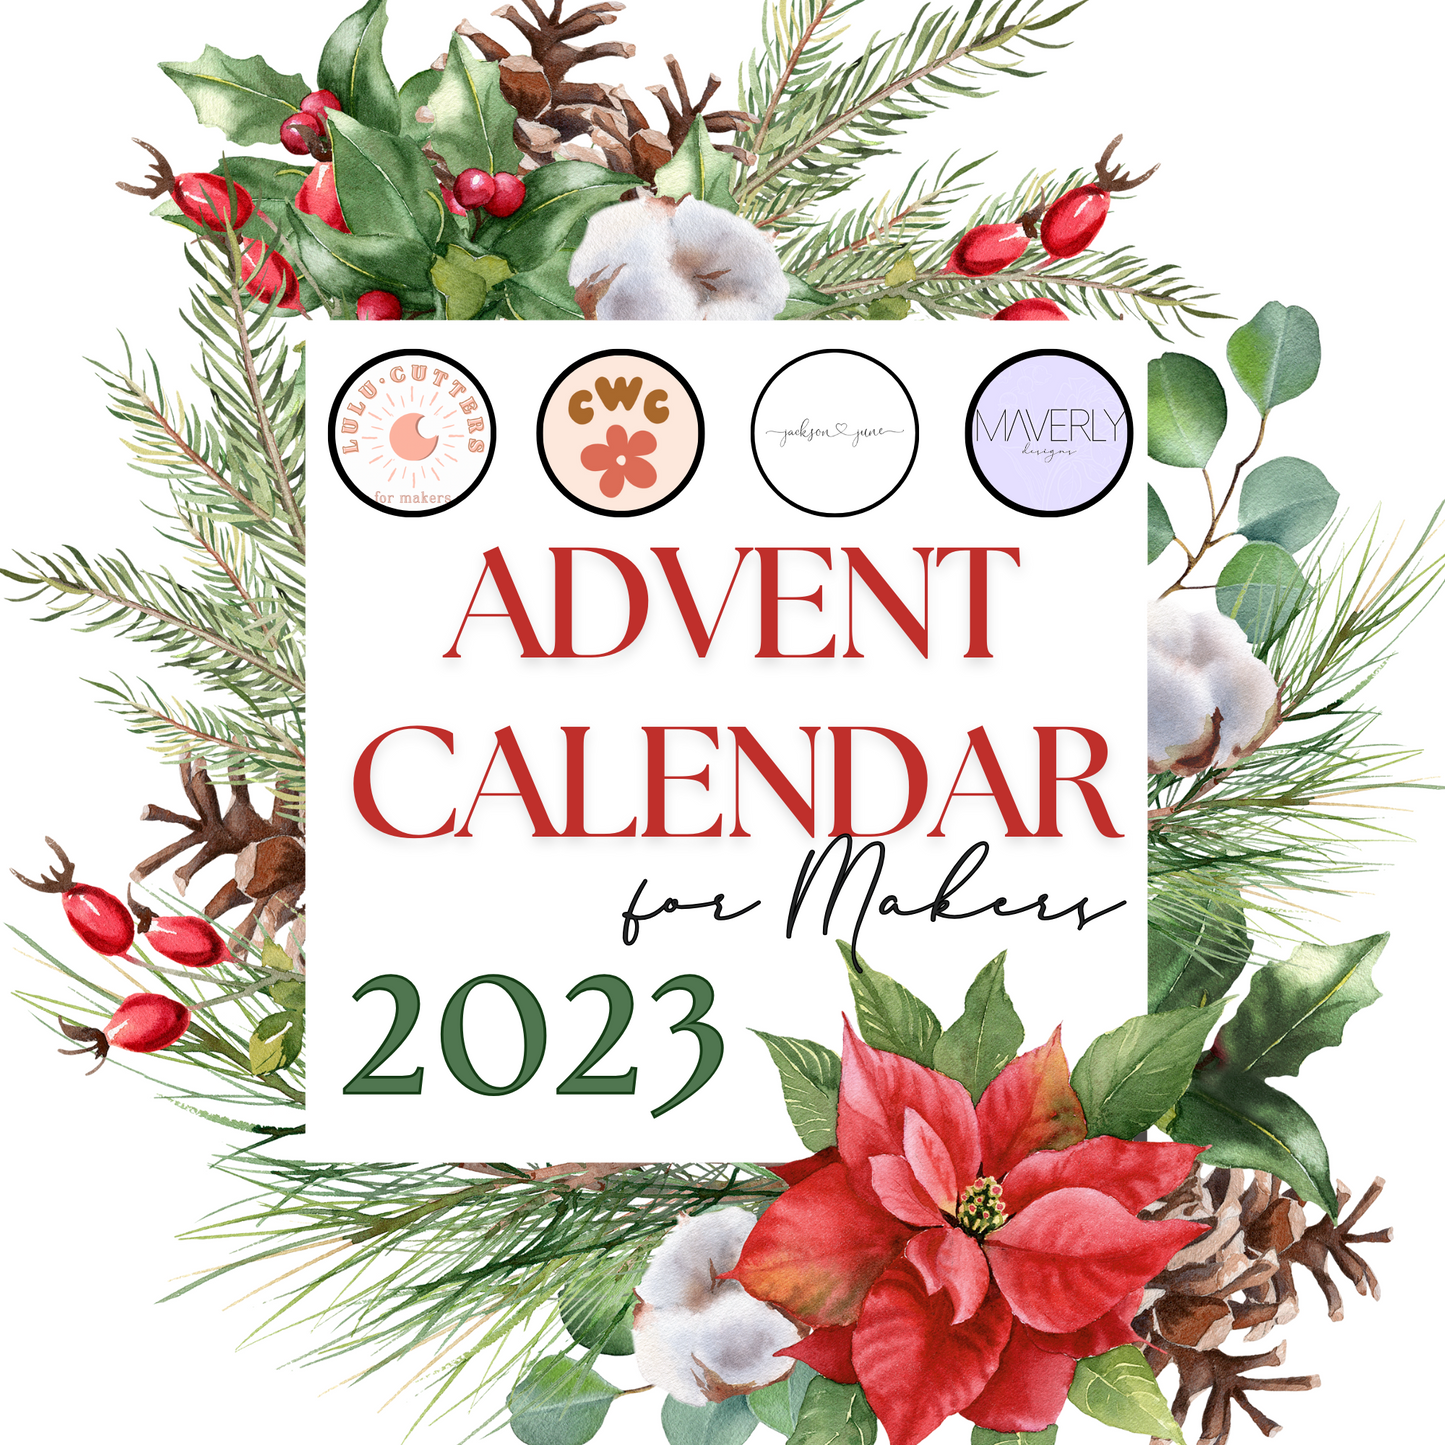 Advent Calendar 2023 - For Makers